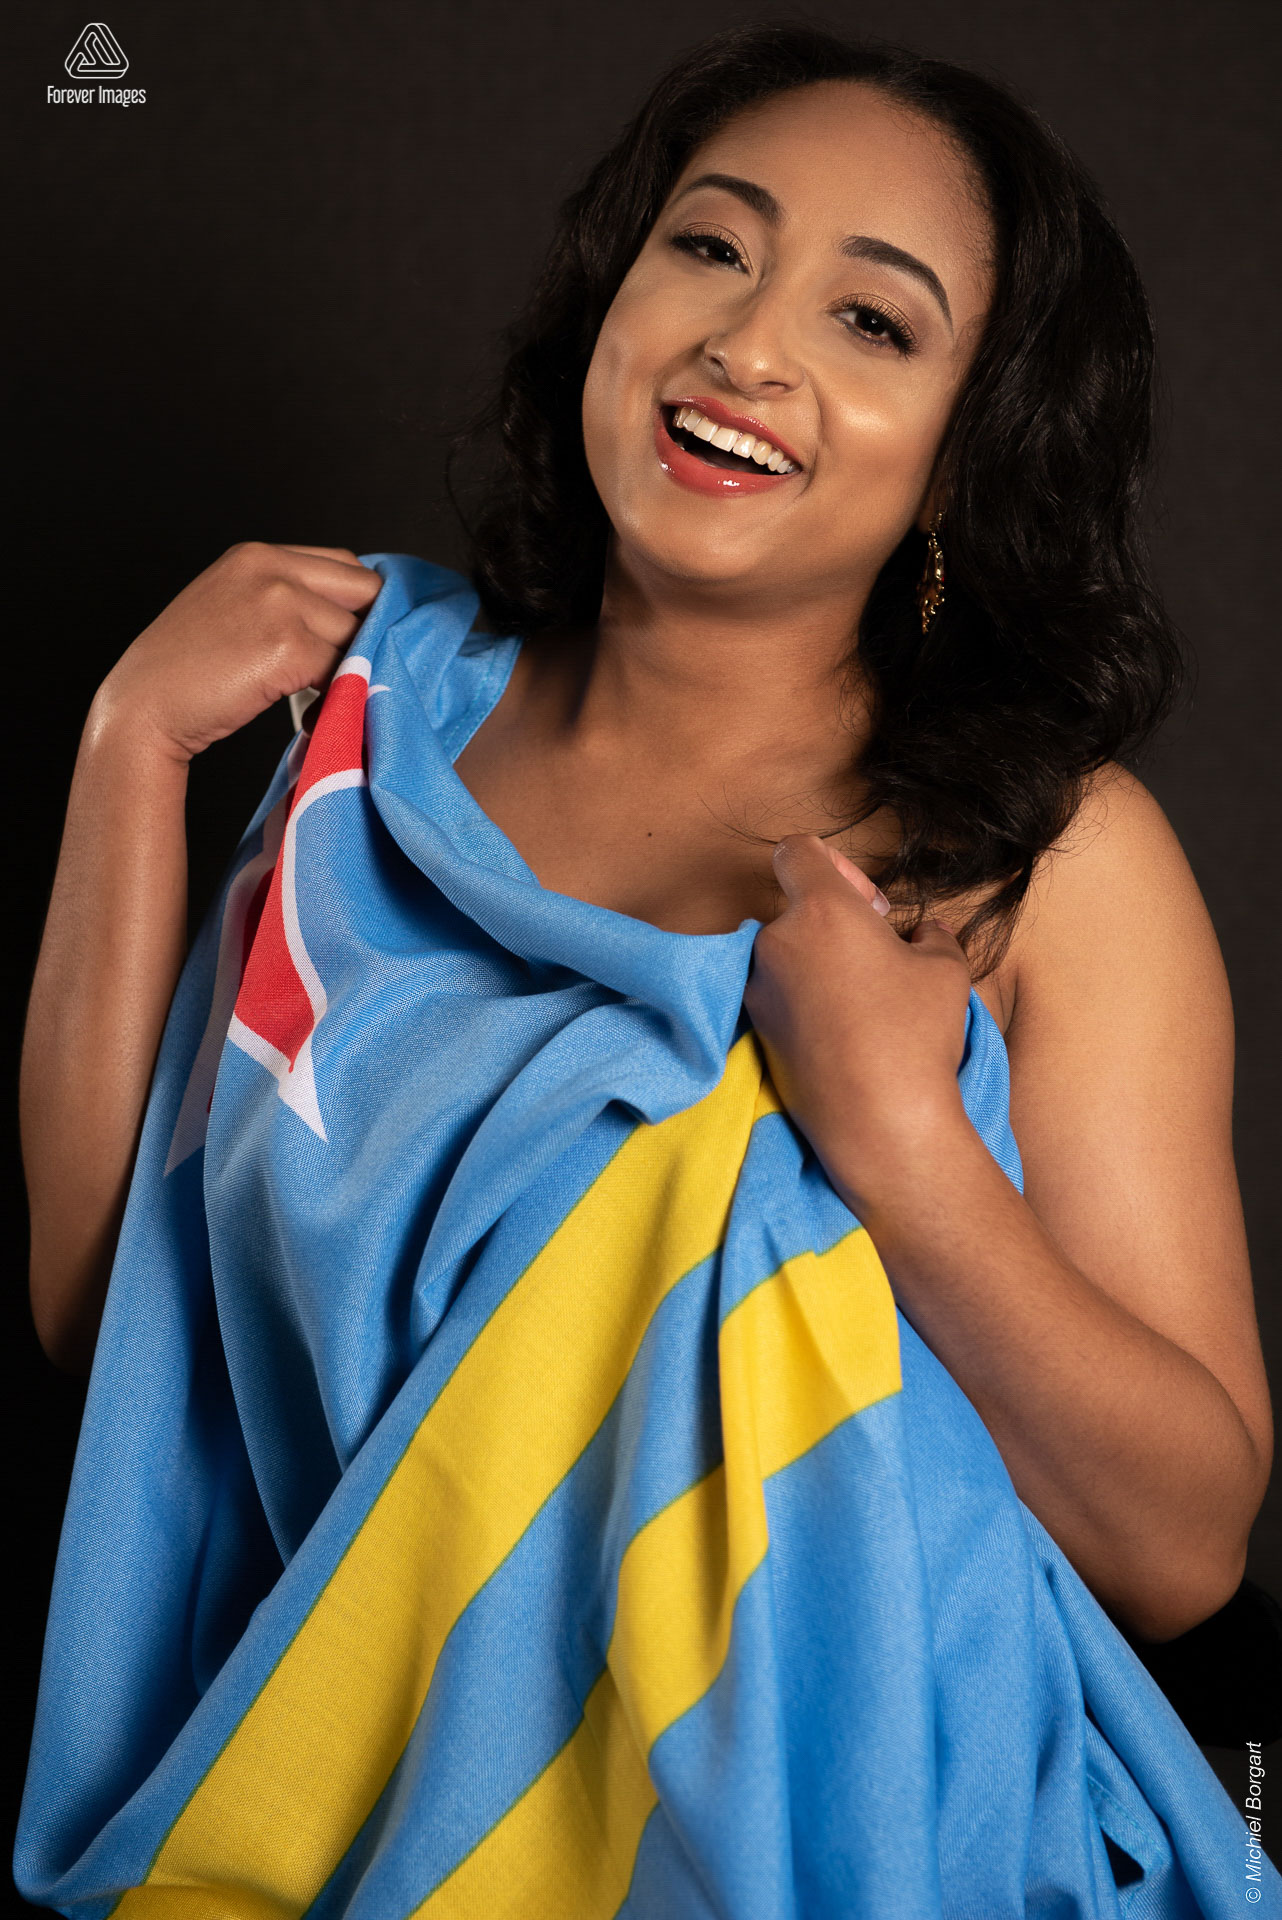 Portrait photo with national flag | Angelique van Varsseveld Miss Planet Aruba Vicky Foundation | Portrait Photographer Michiel Borgart - Forever Images.